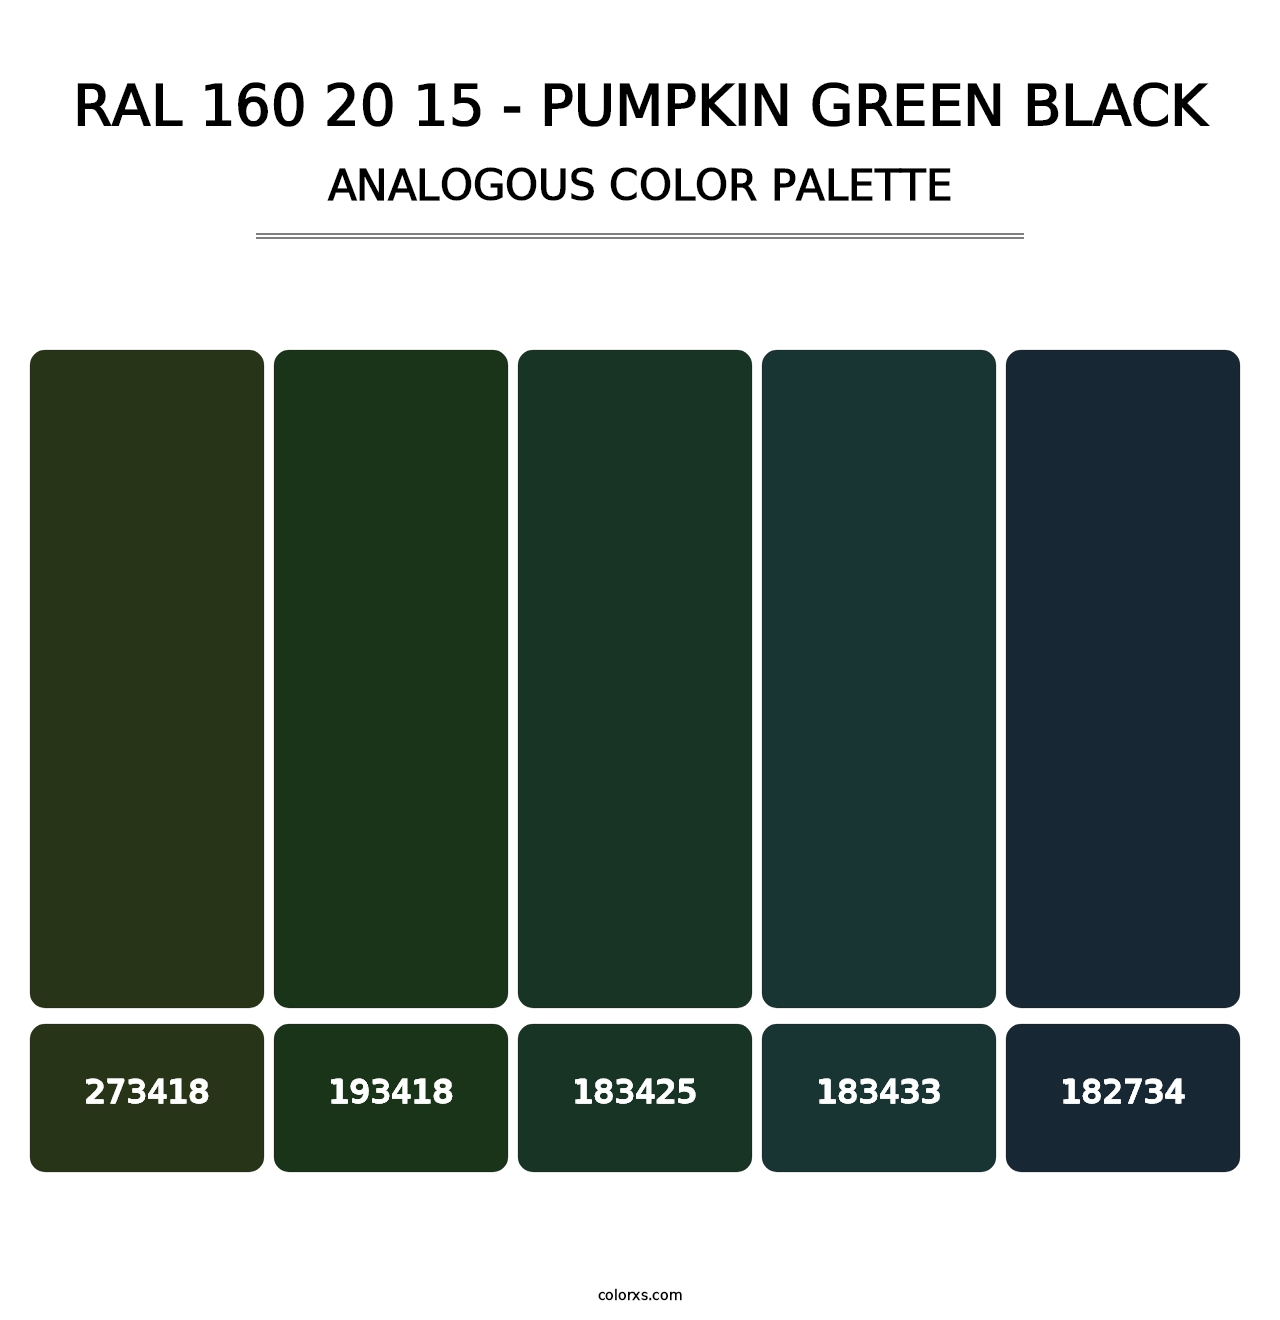 RAL 160 20 15 - Pumpkin Green Black - Analogous Color Palette